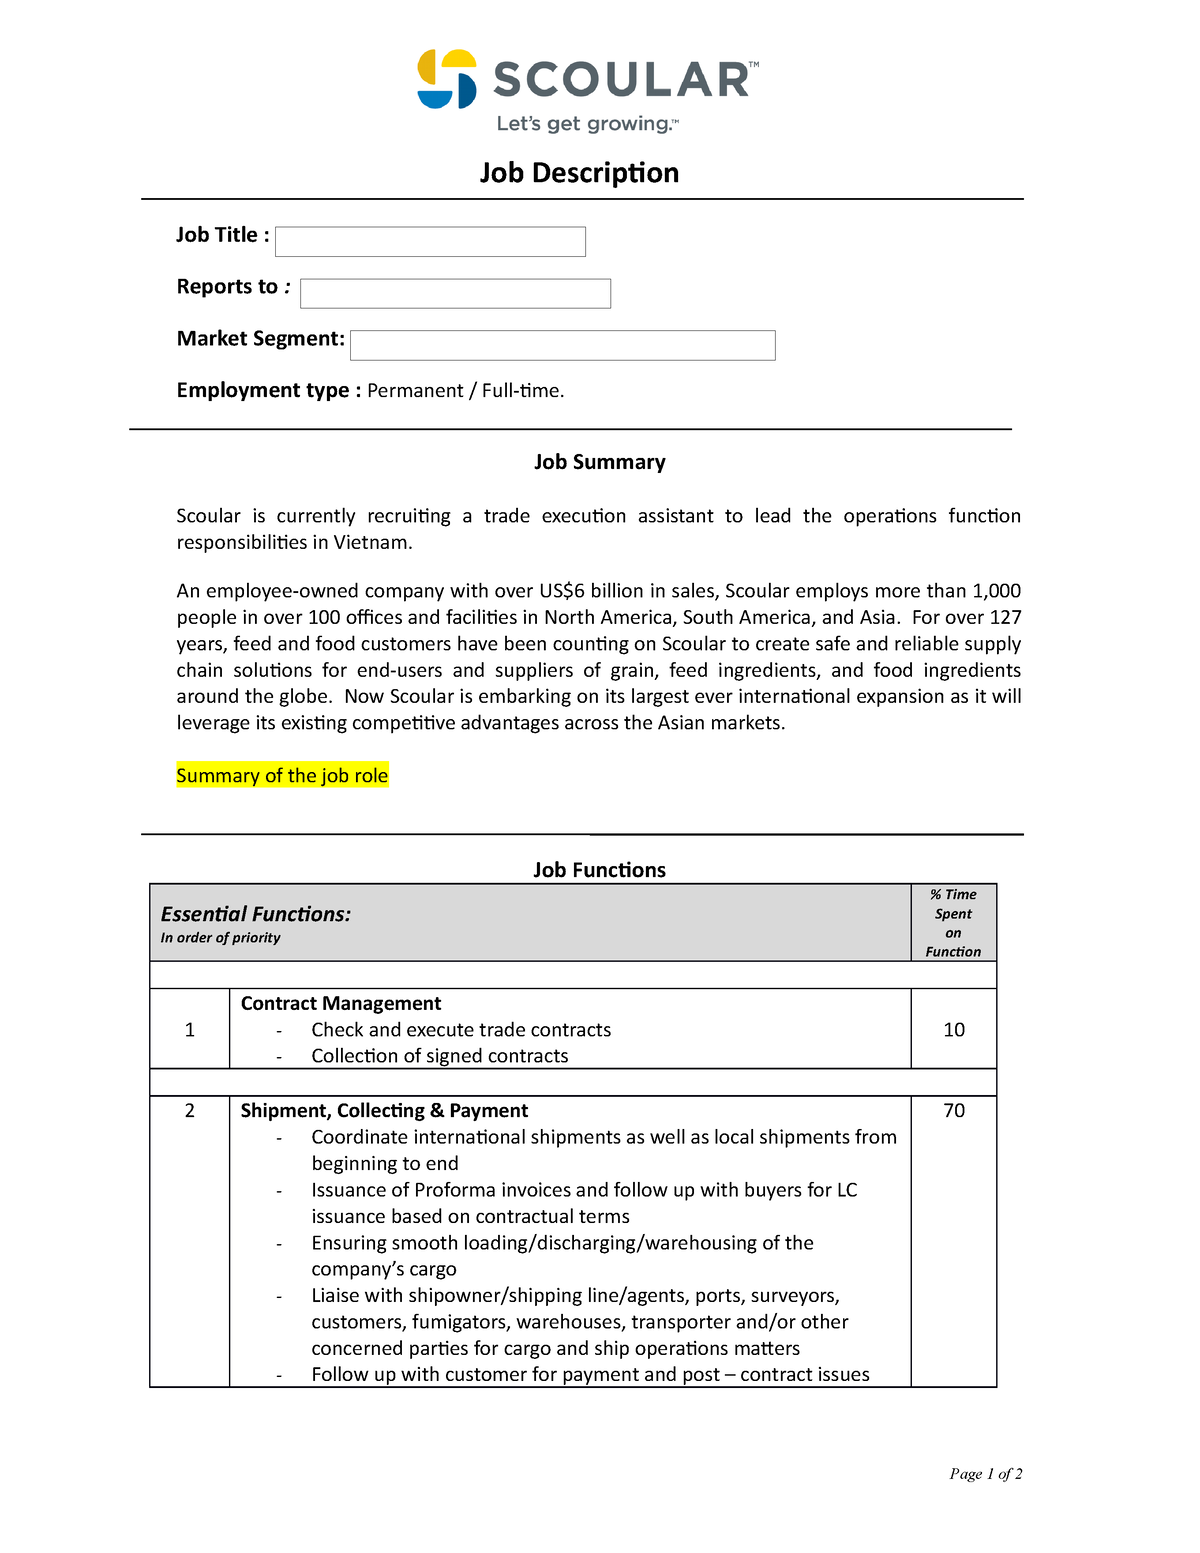 JD Template Trade execution assistant - Job Description Job Title ...